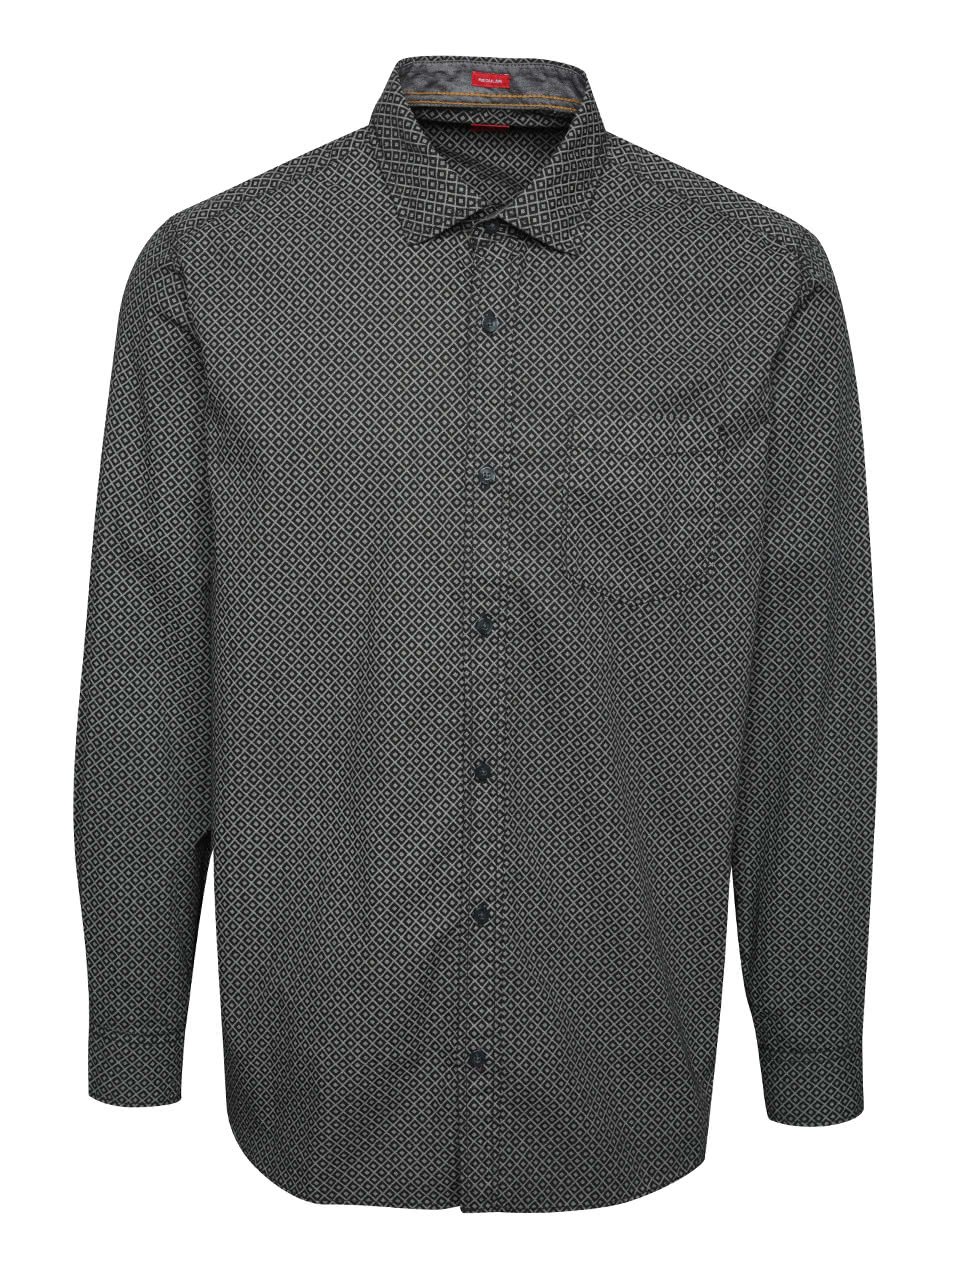 Šedo-černá pánská vzorovaná košile s.Oliver